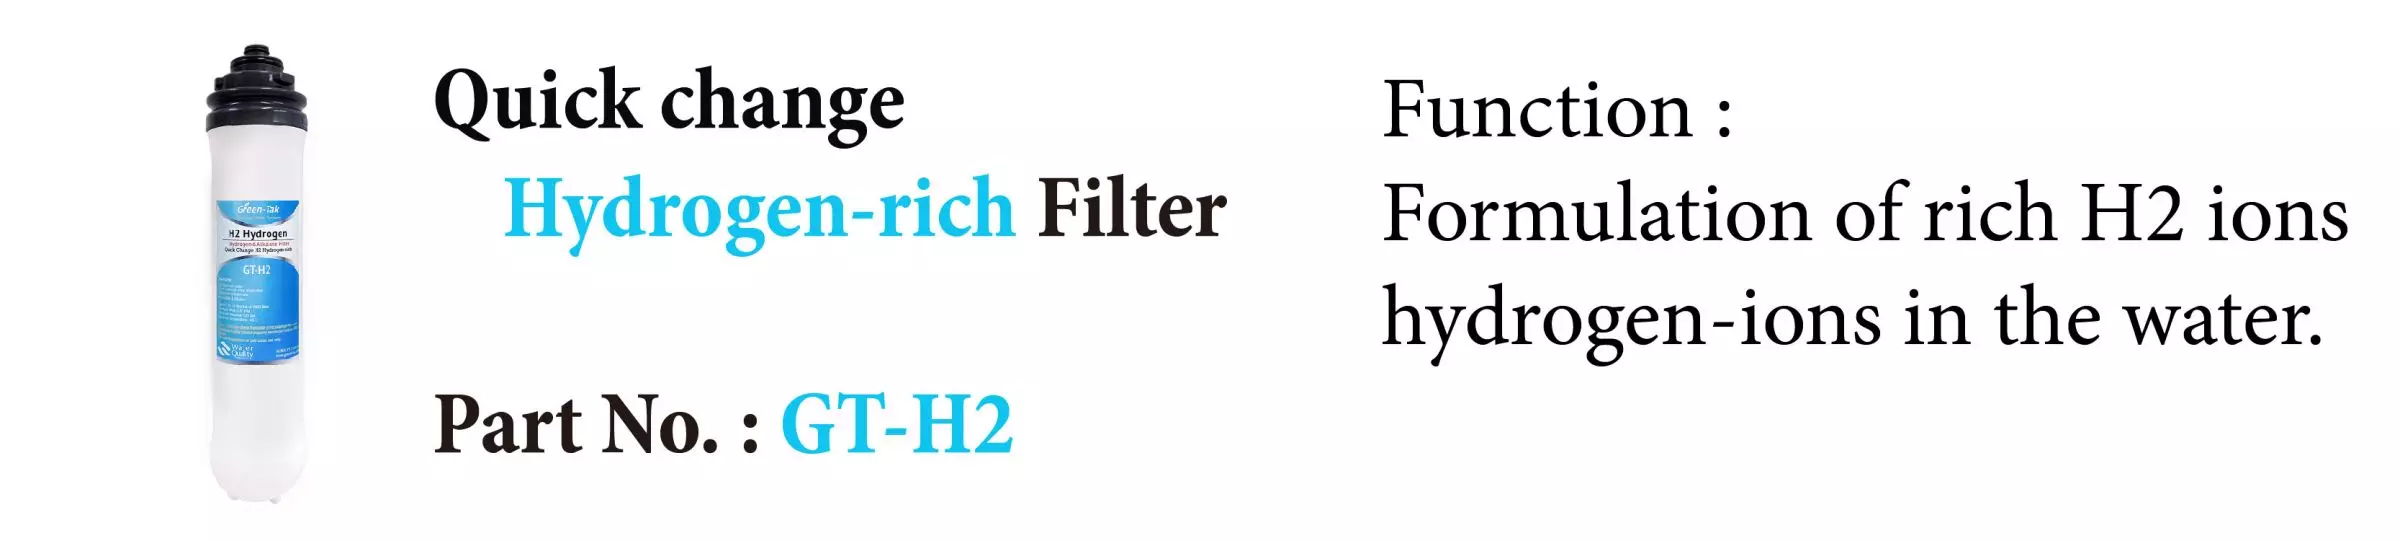 GT-H2 Quick Change Hydrogen-rich Filter-Function